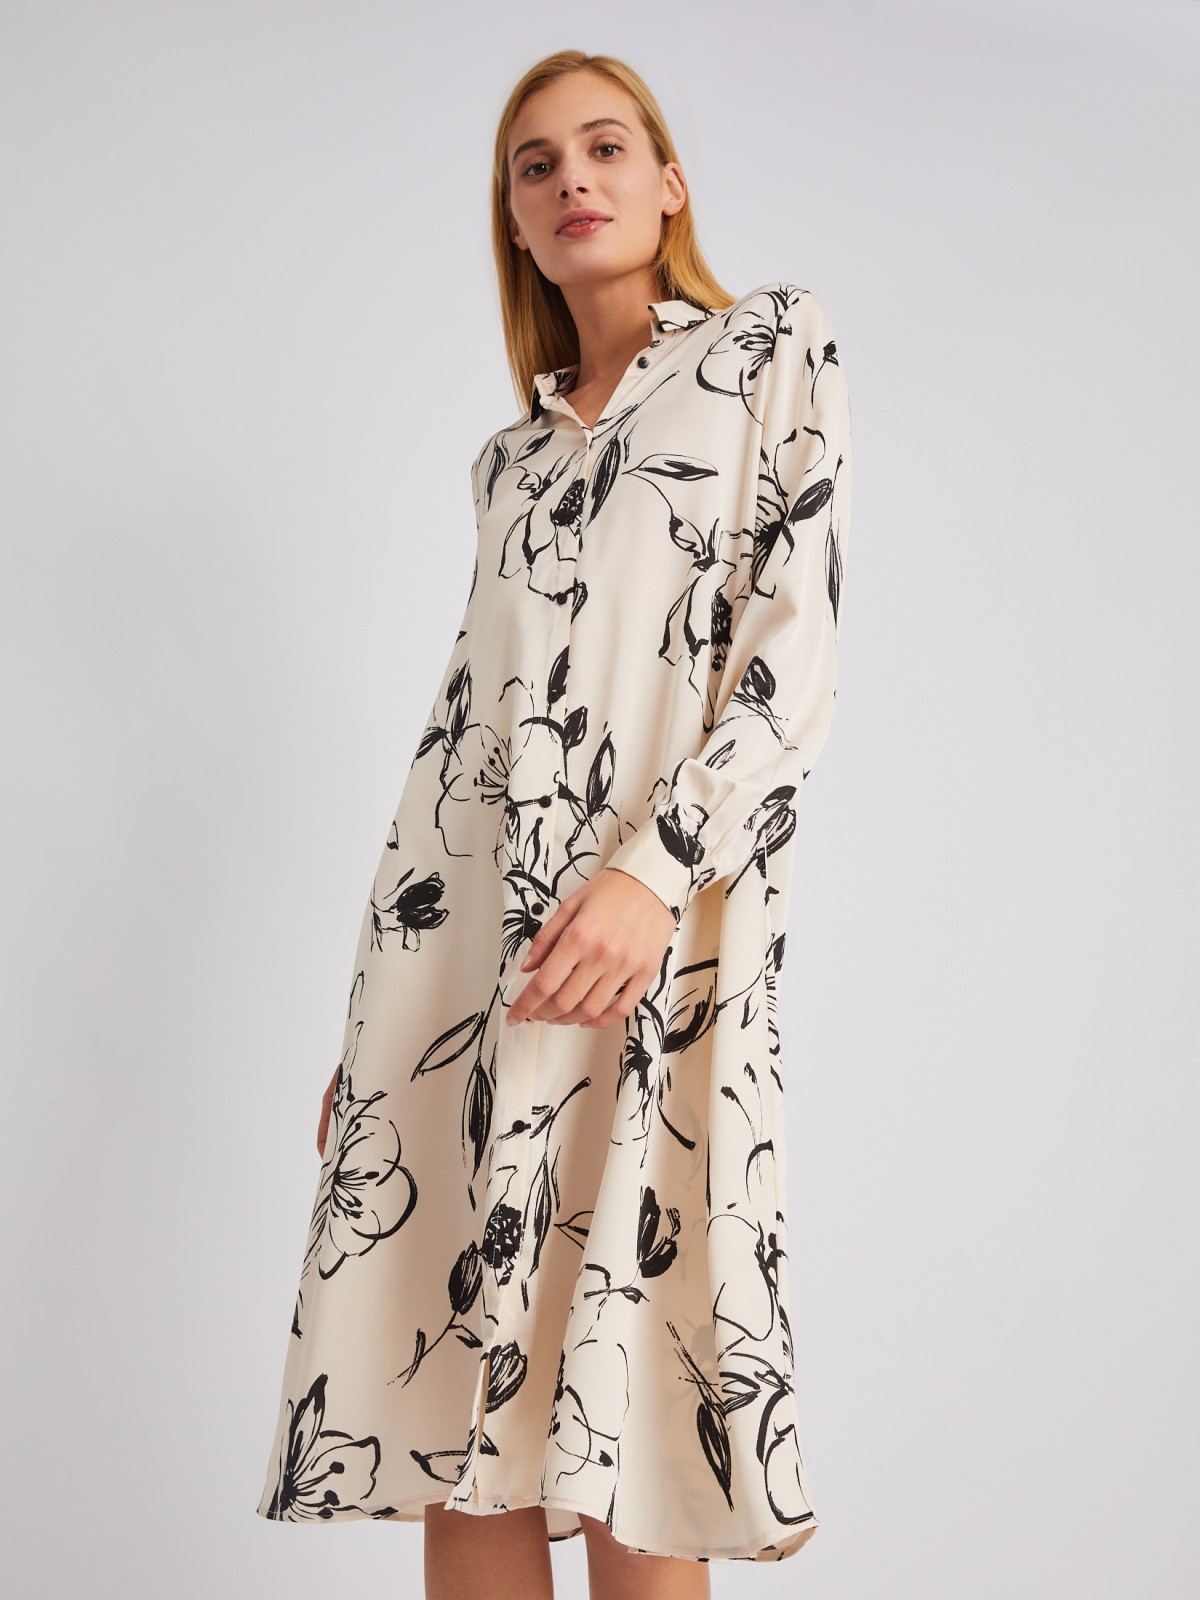 Атласное платье-рубашка с воротником и акцентном на талии zolla 02411827Y343, цвет молоко, размер XS